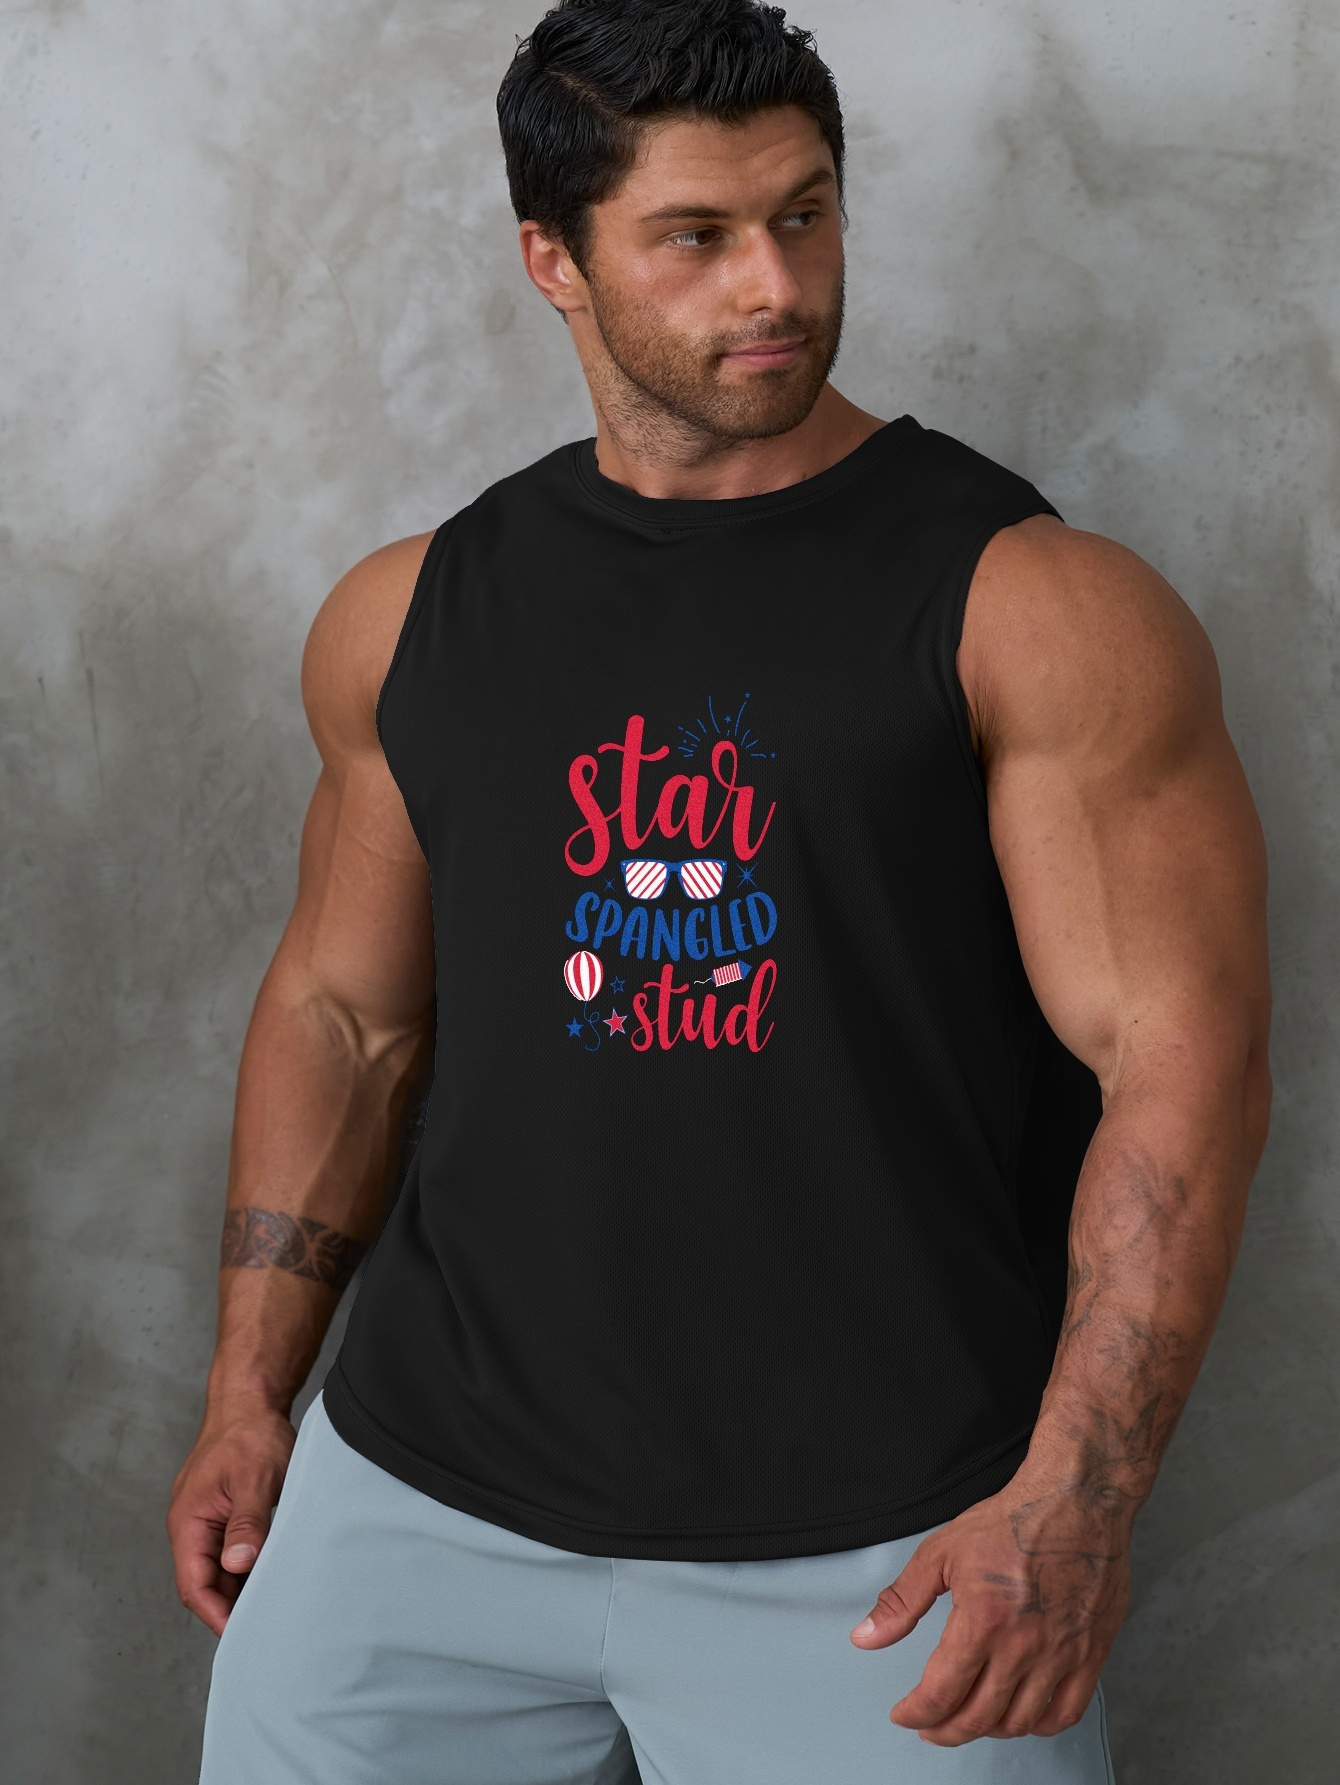 Gym Men Muscle Sleeveless Shirt Tank Top Bodybuilding Sport Fitness Workout  Vest